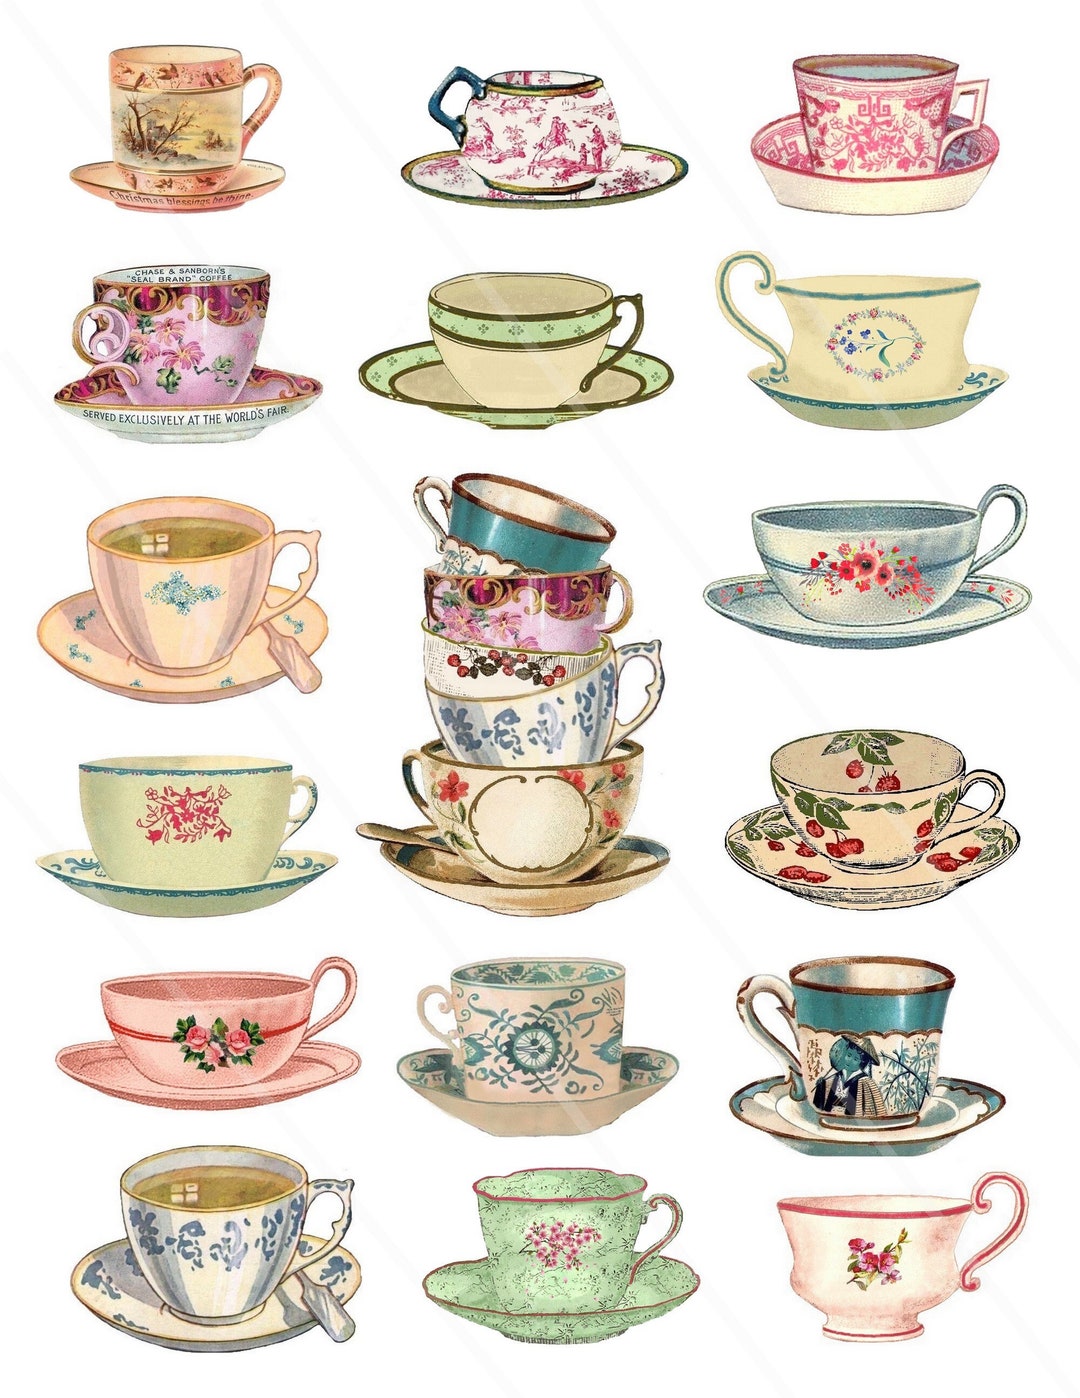 Teacup Clipart Tea Clipart Teacup Floral Vintage Tea Cups Tea Party Clipart  Tea Cups Clipart Teapots Digital Collage Sheet Fussy Cut,cricut 